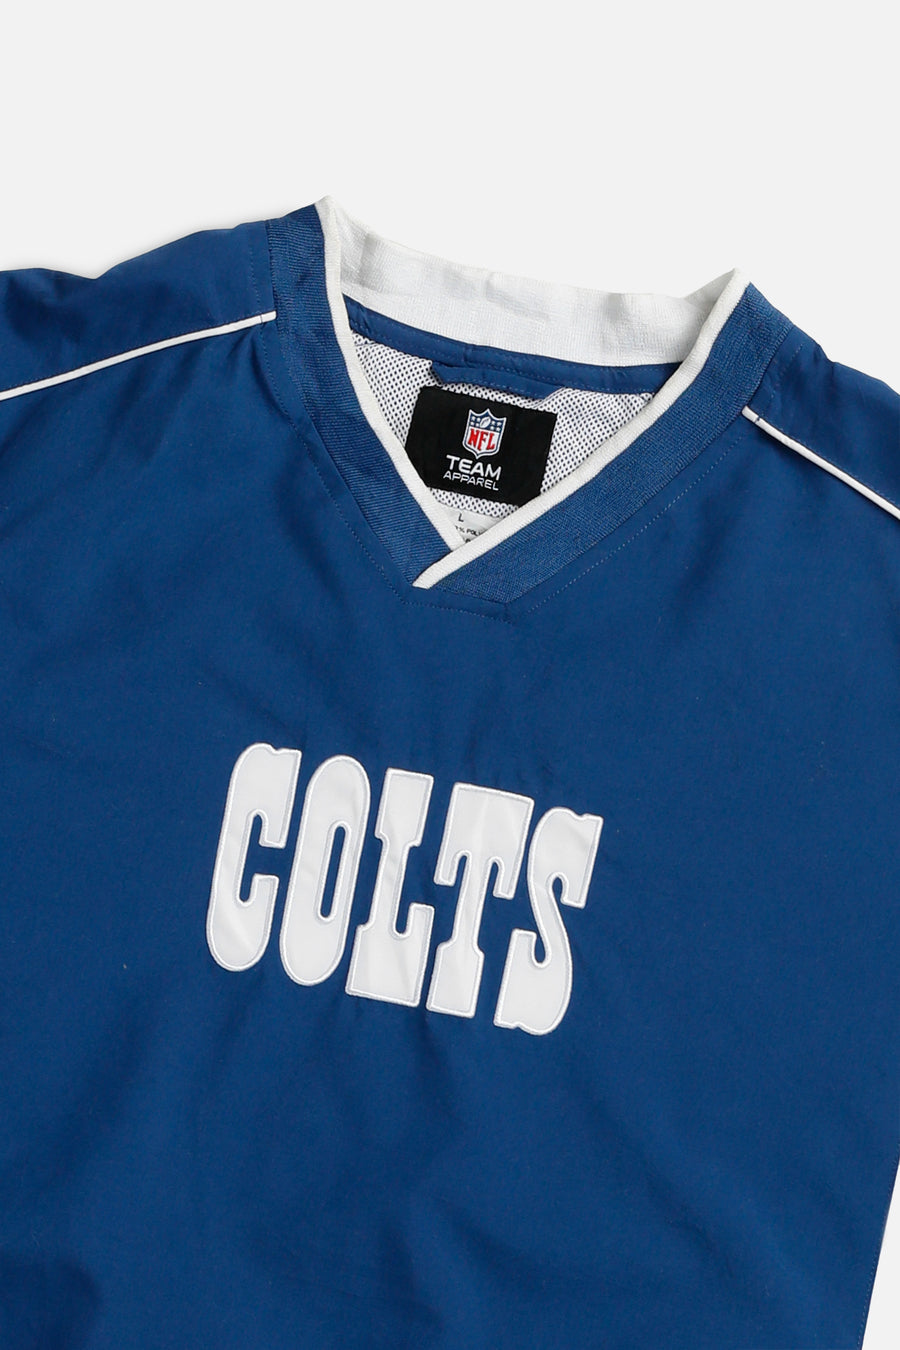 Vintage Indianapolis Colts NFL Windbreaker Jacket - L